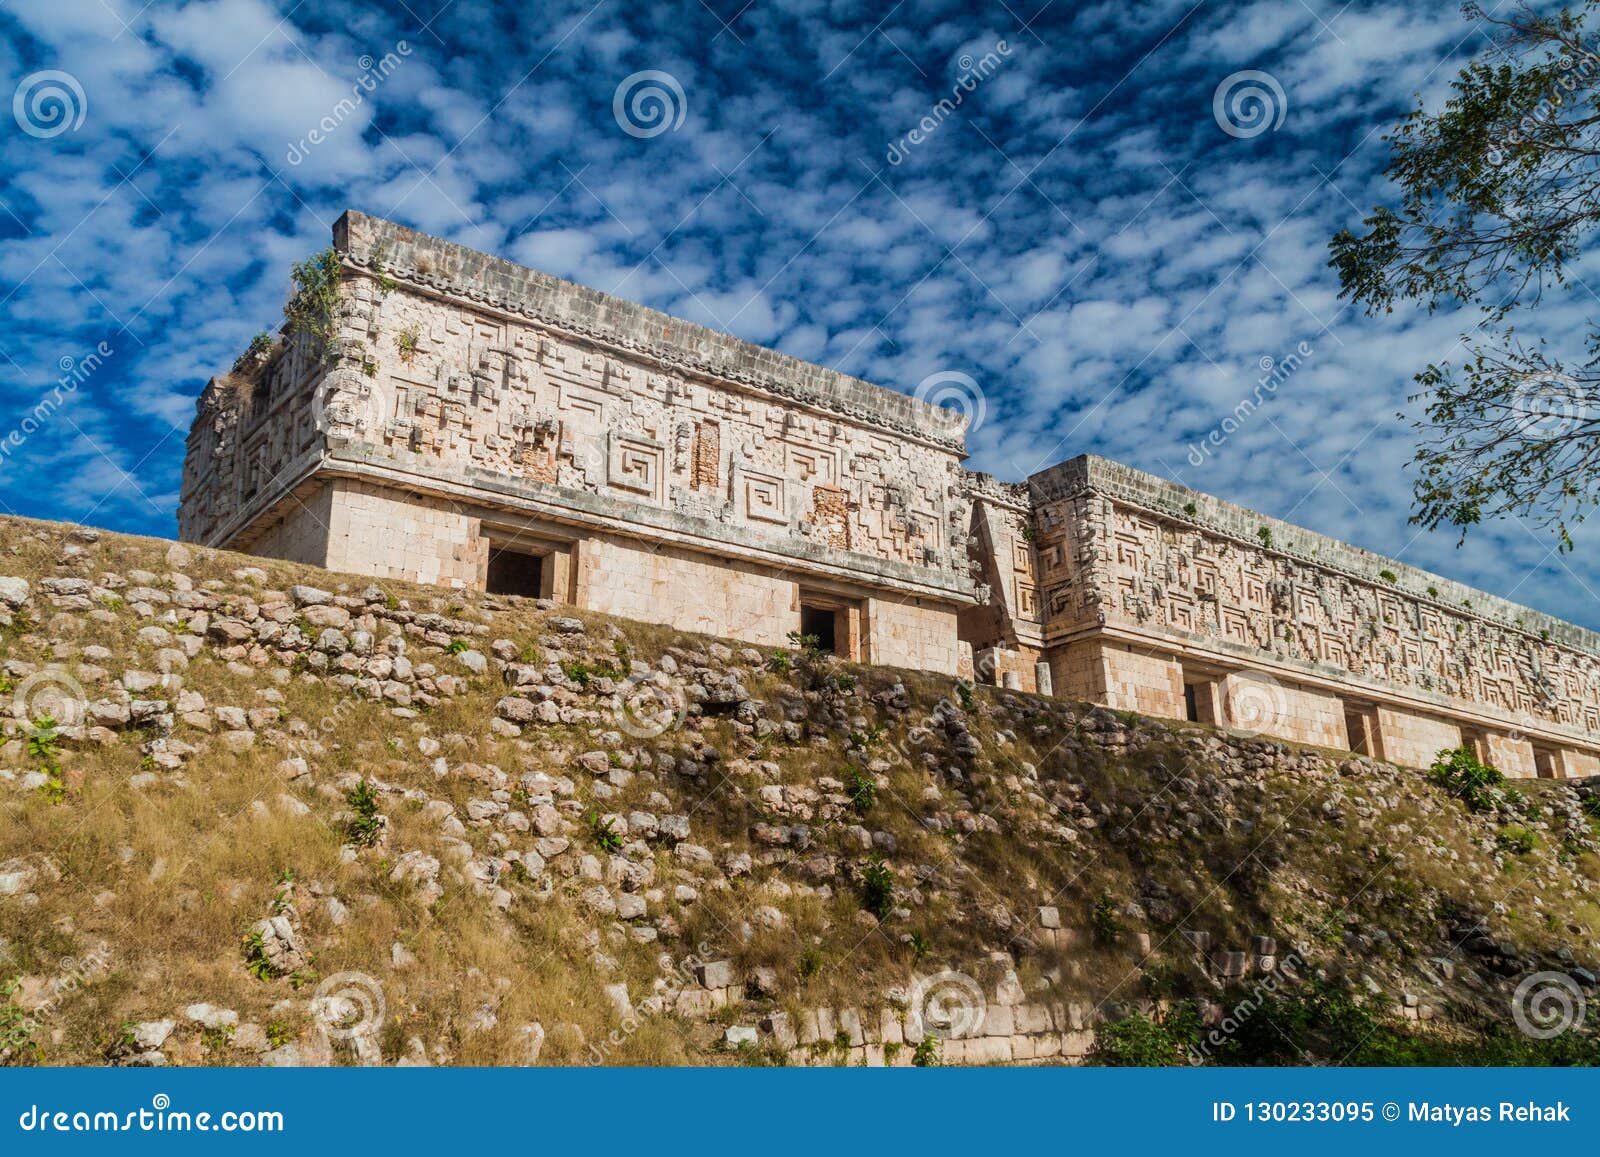 palacio del gobernador governor`s palace building in the ruins of the ancient mayan city uxmal, mexi